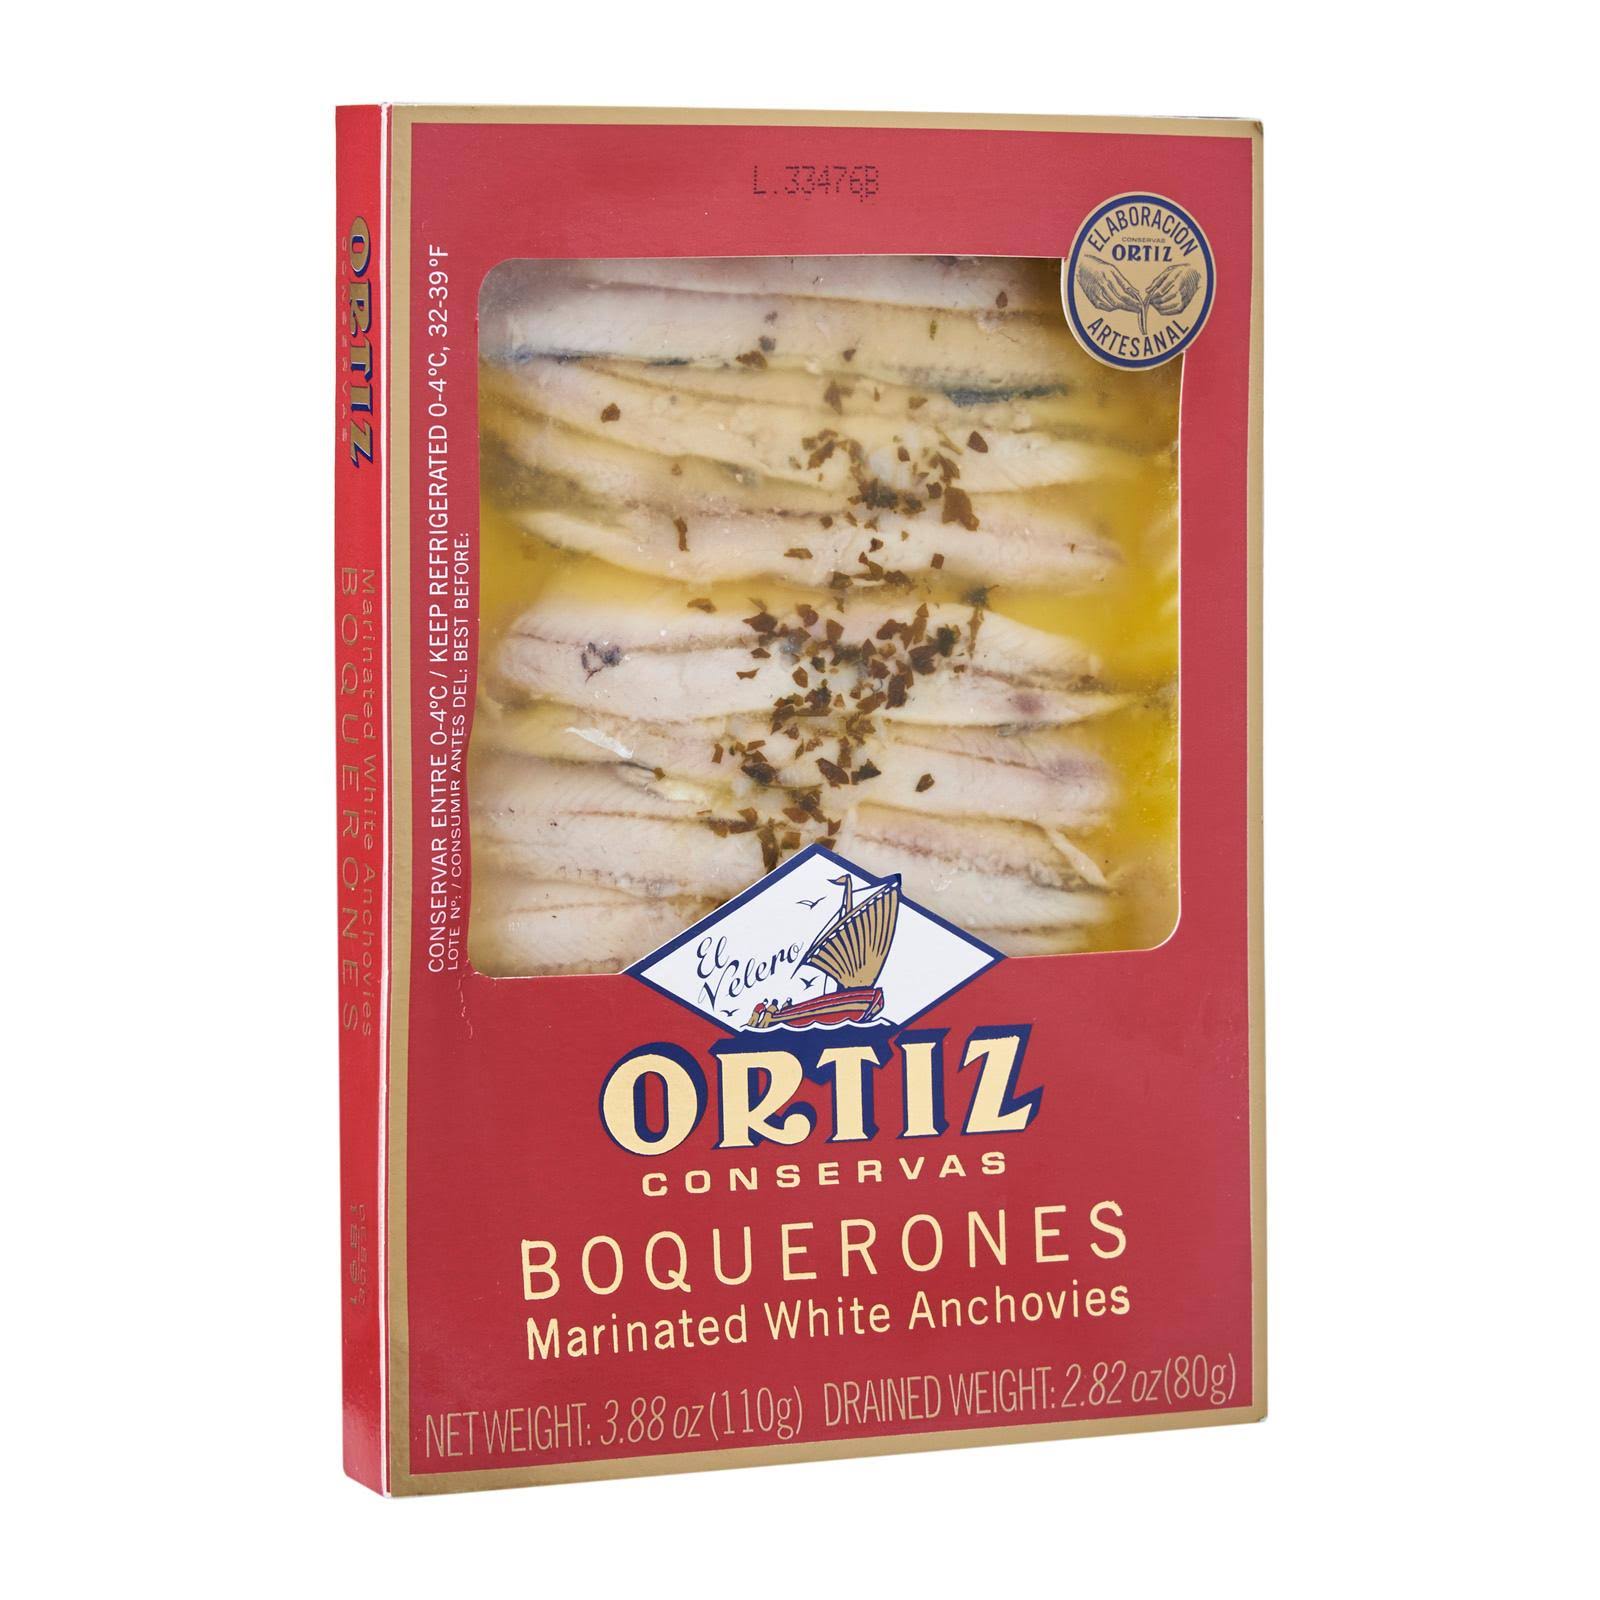 Ortiz Boquerones Marinated White Anchovies - 3.88oz